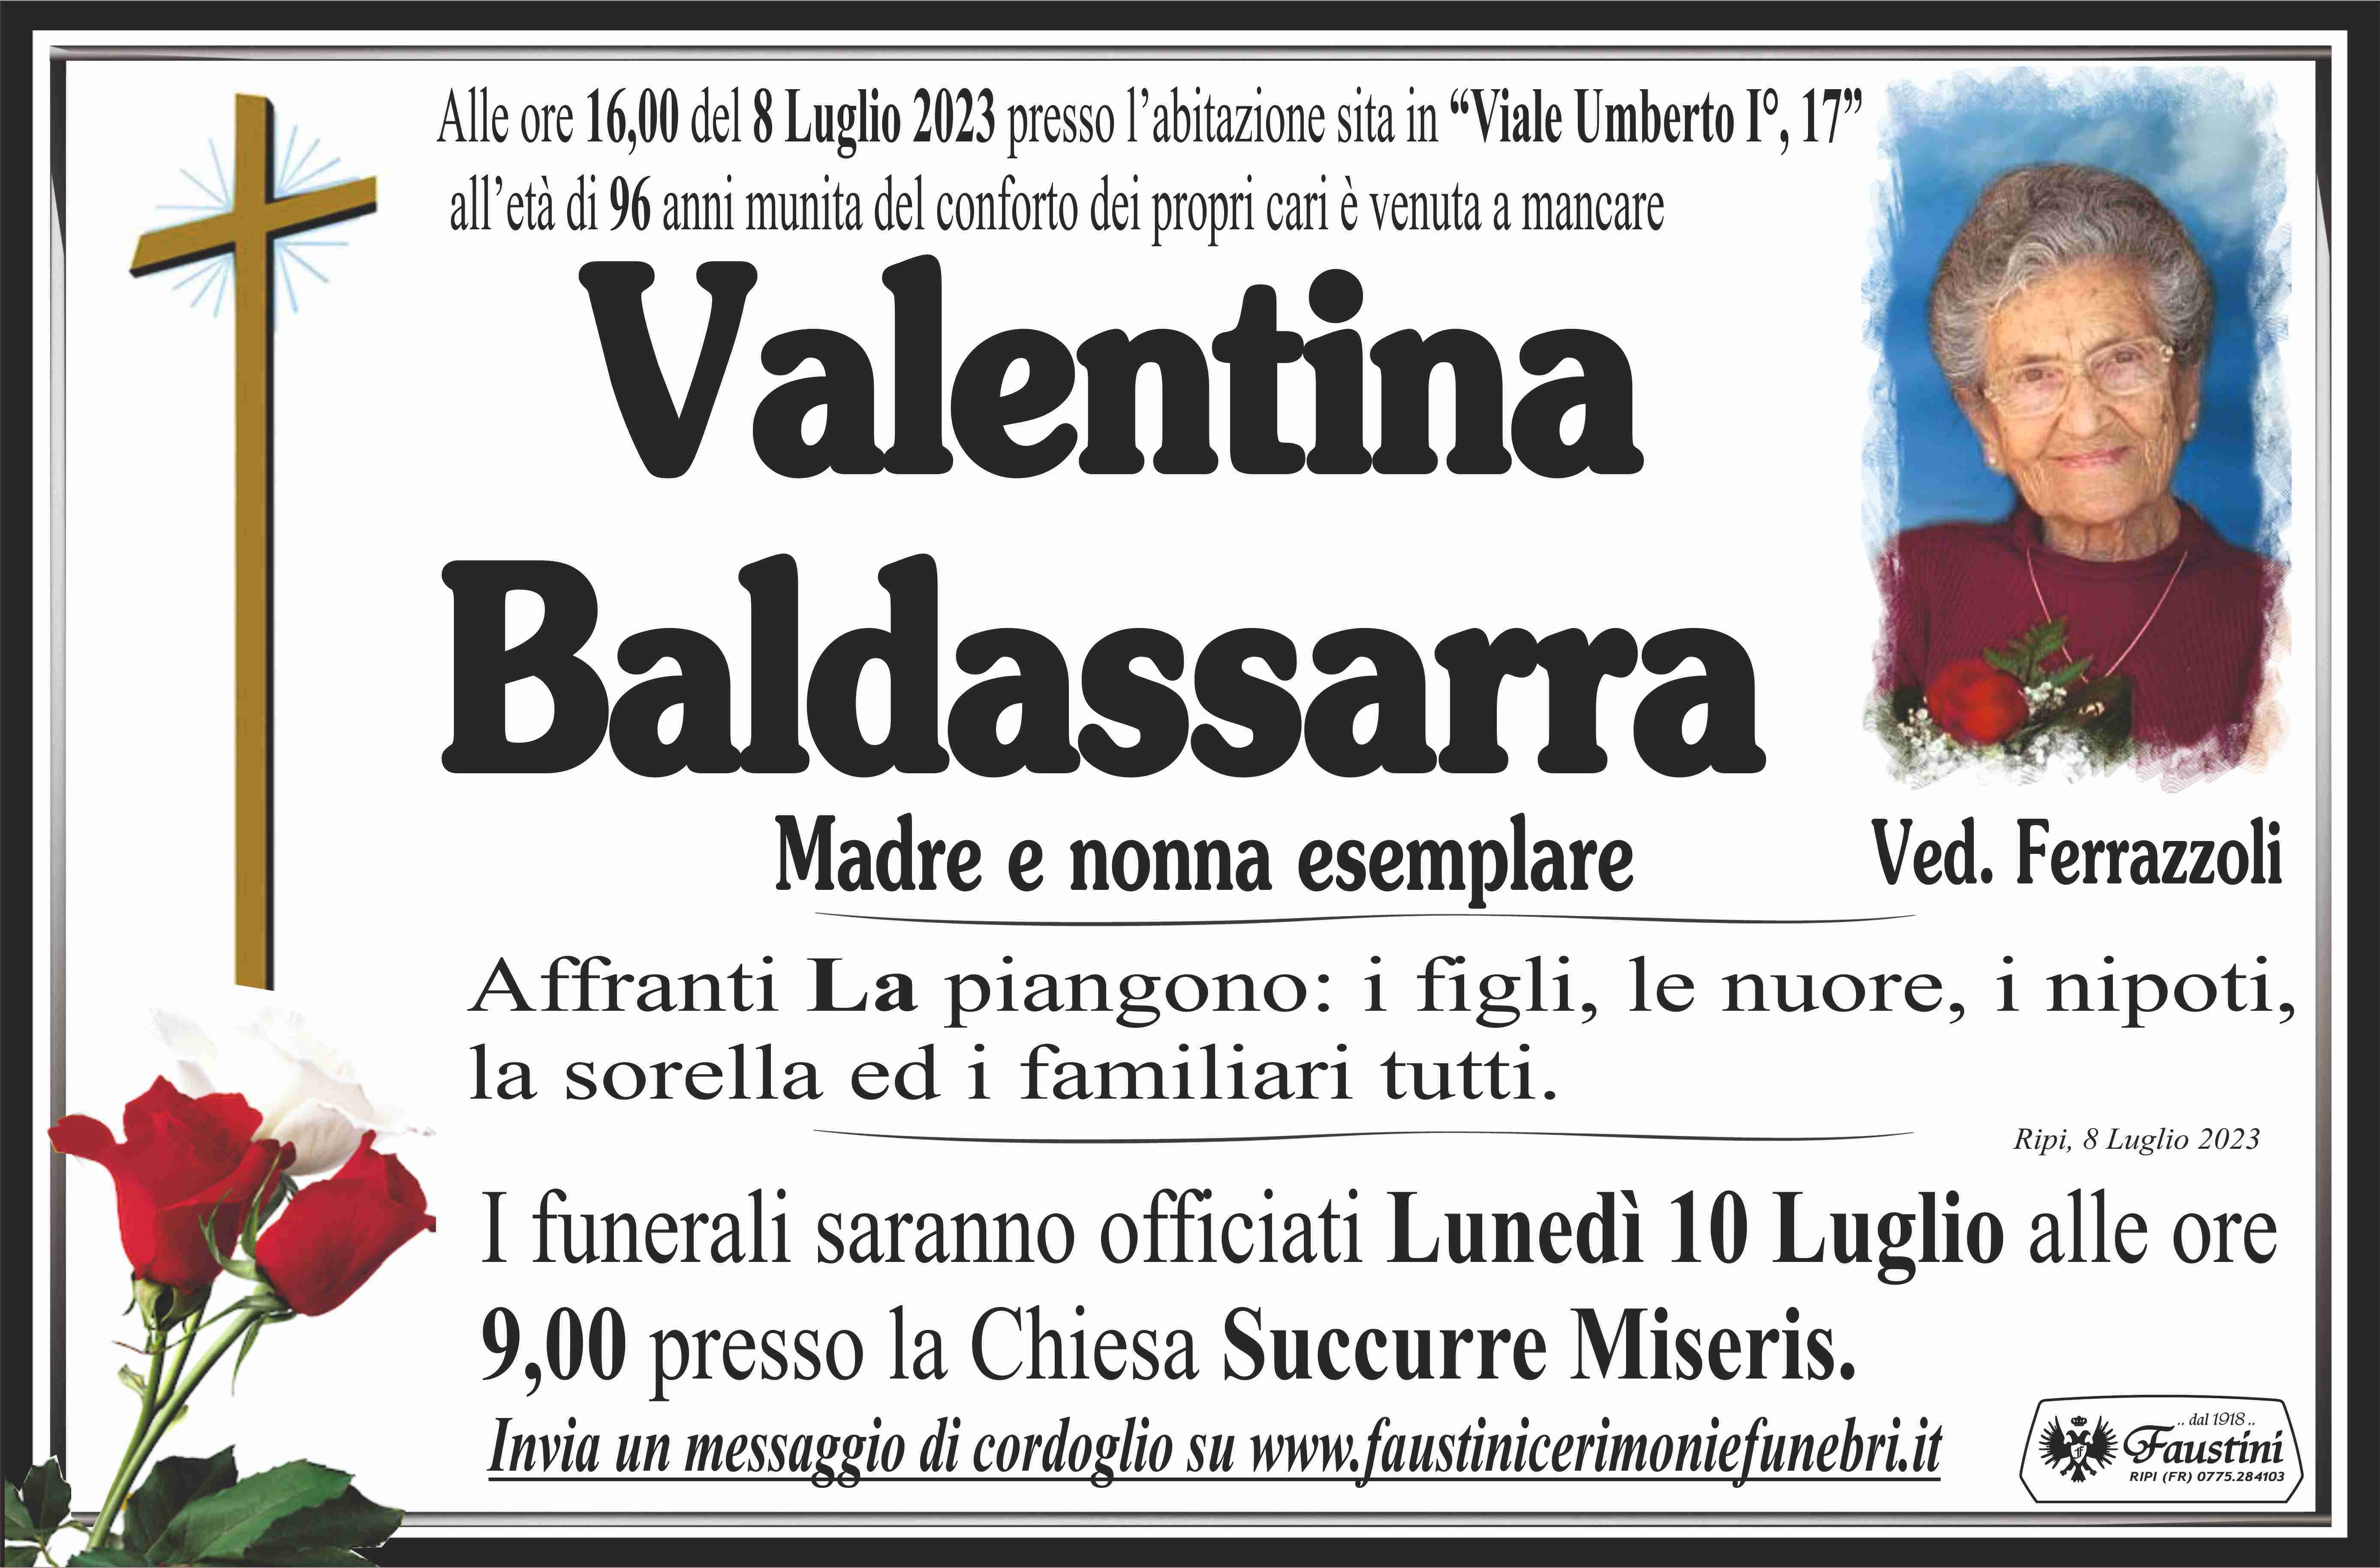 Valentina Baldassarra